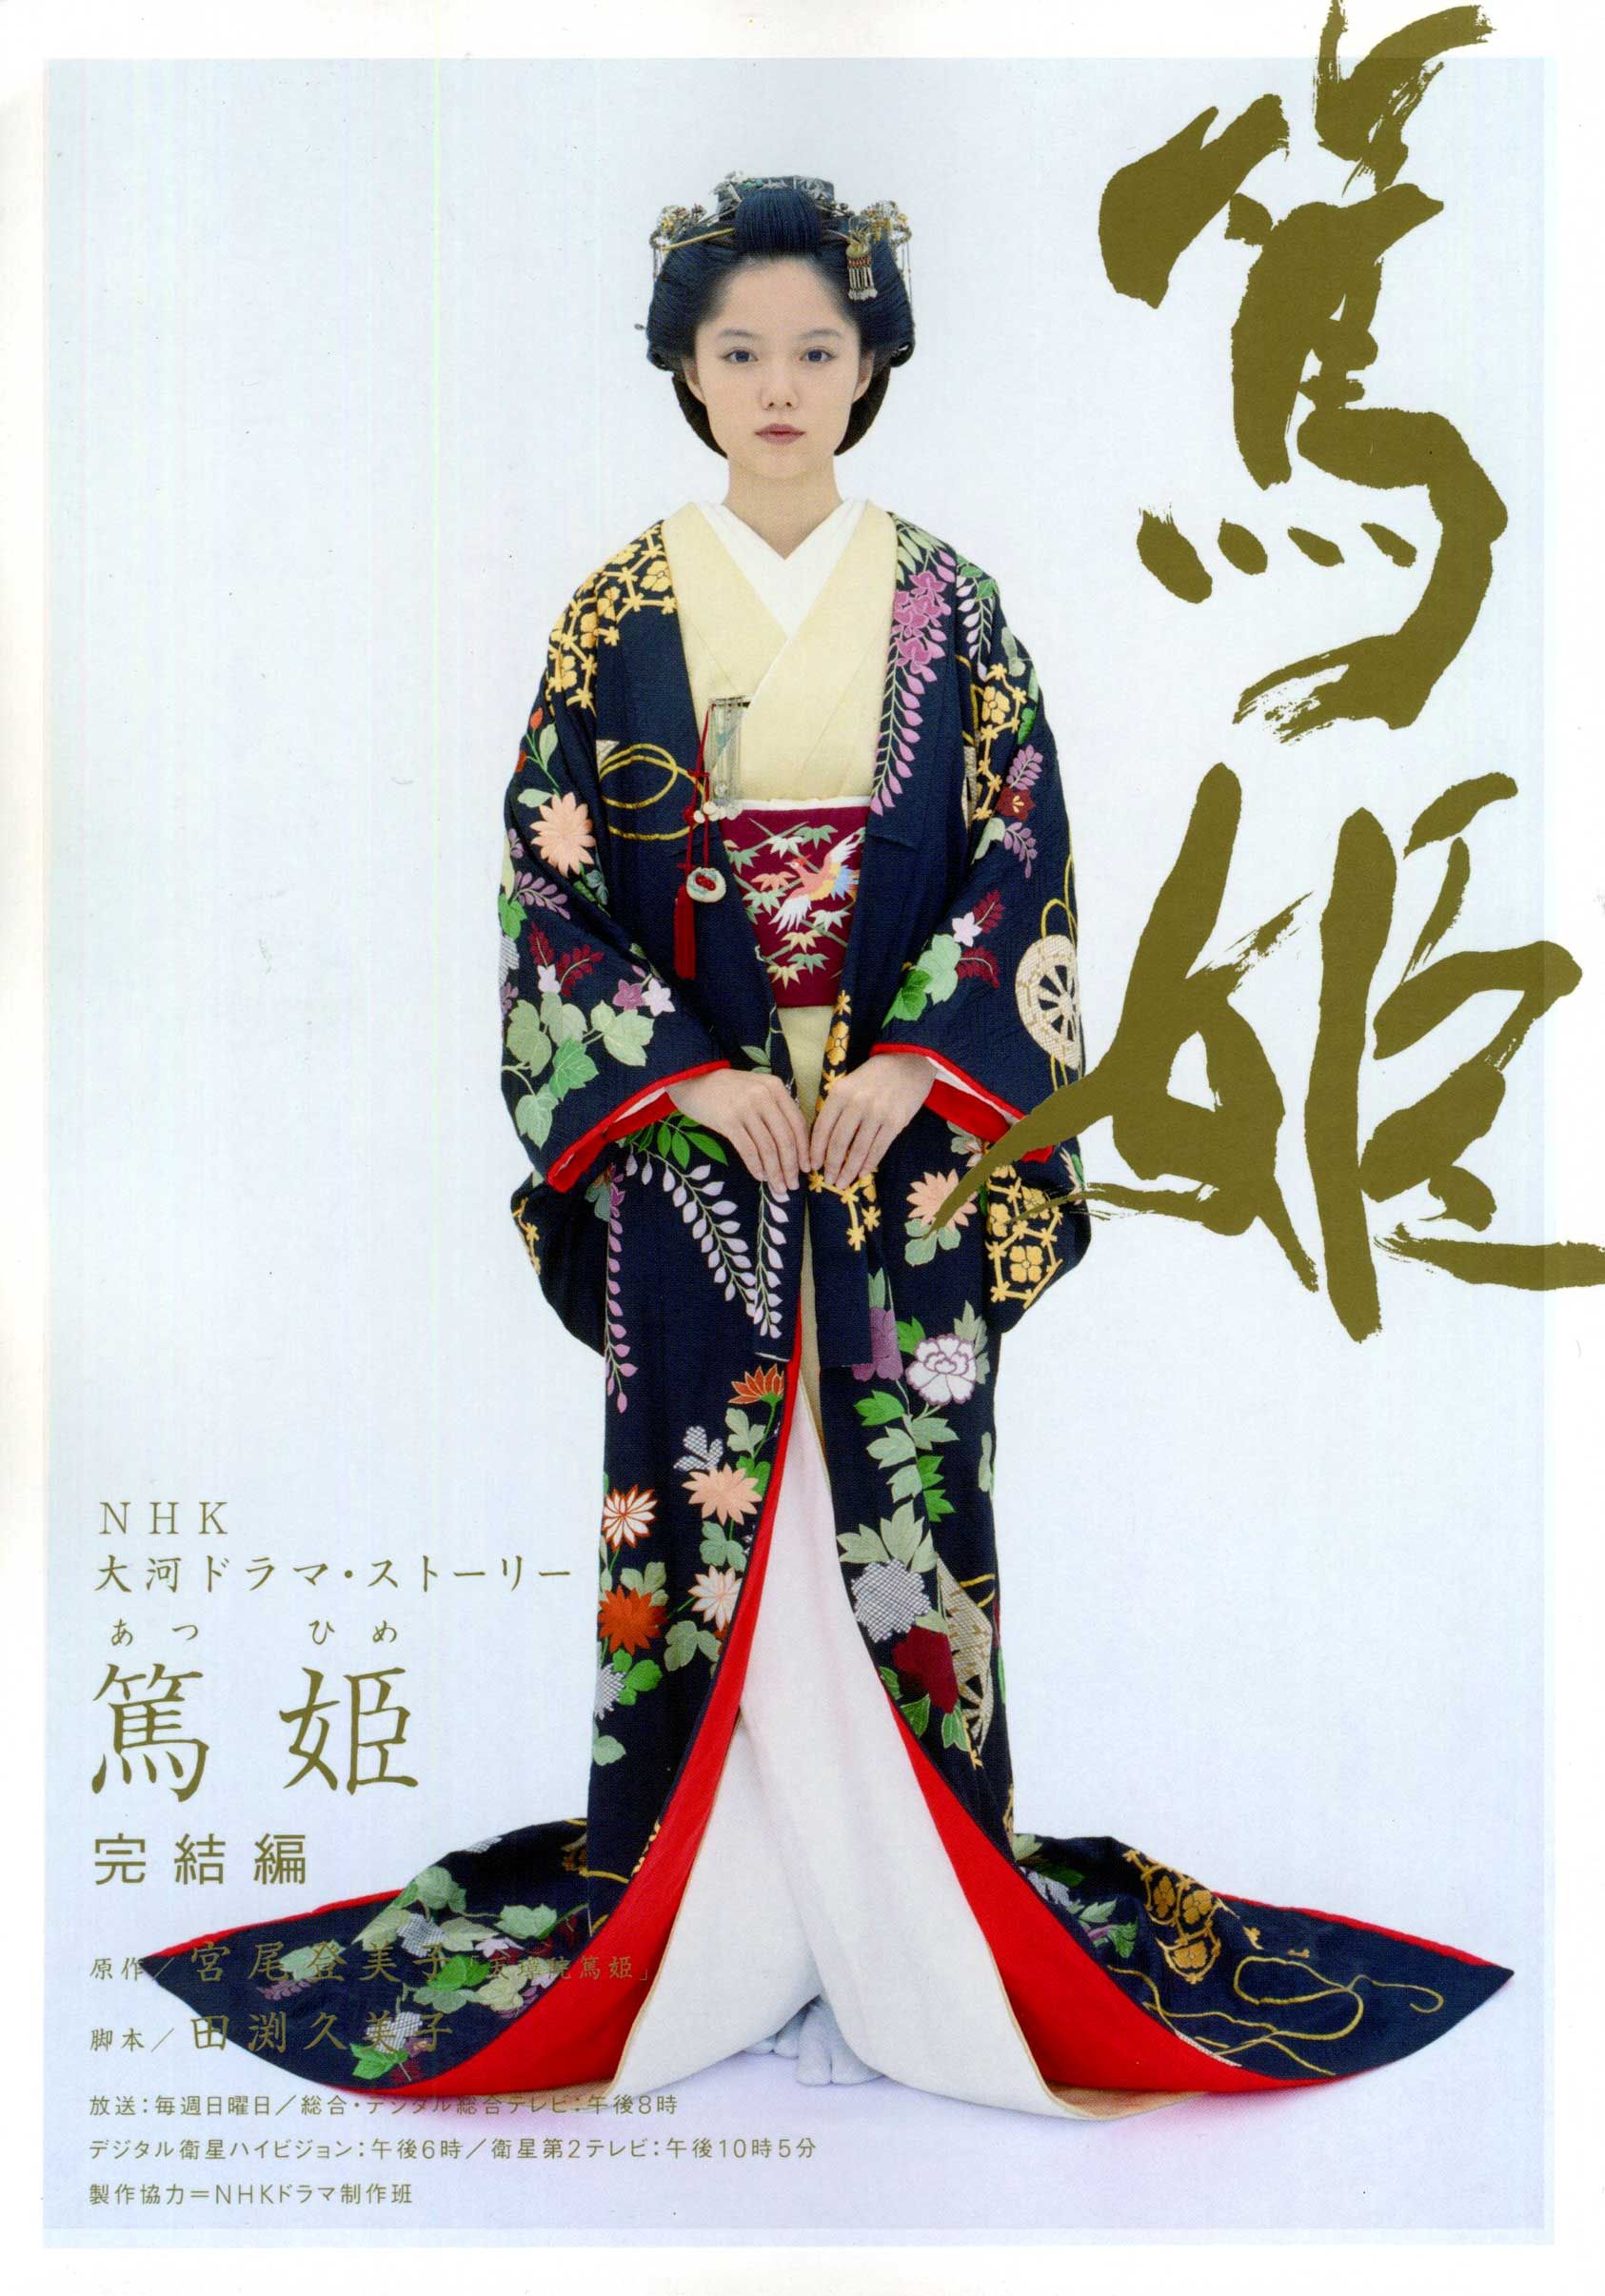 Kimono, busana tradisional Jepang sejak ratusan tahun silam